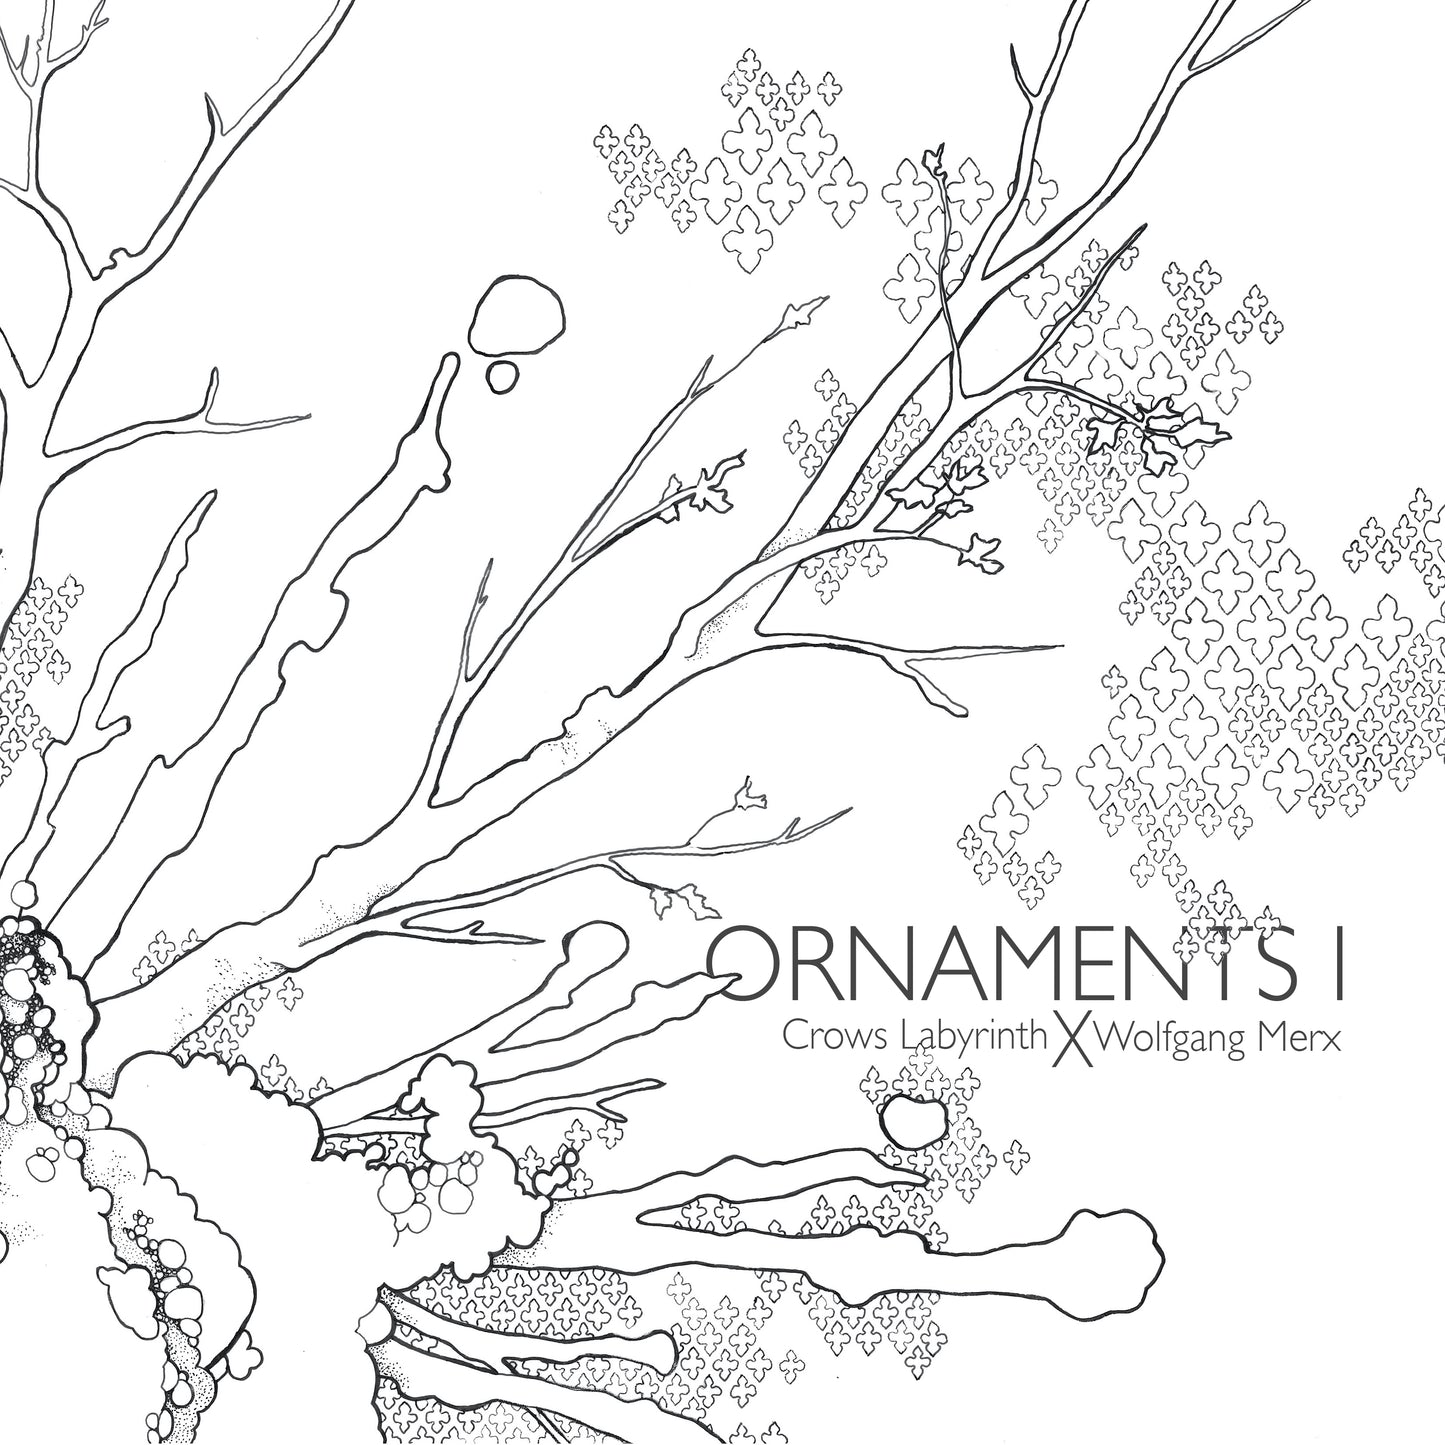 Ornaments I / Crows Labyrinth & Wolfgang Merx